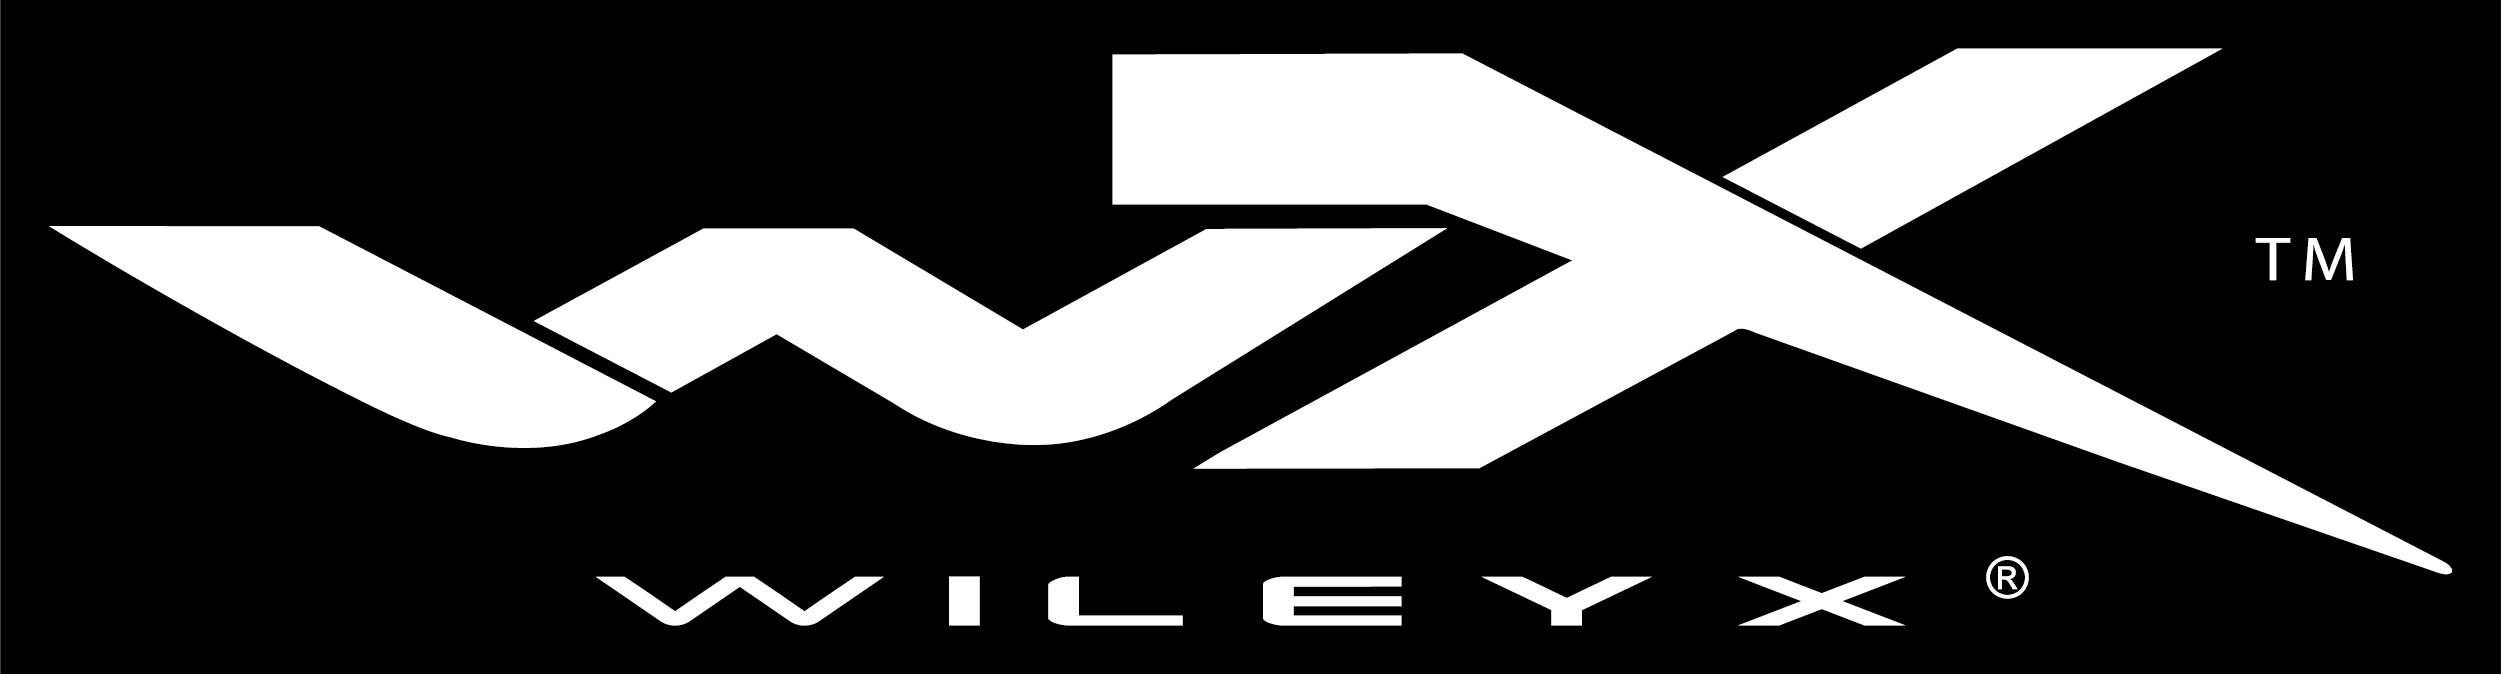 W an X Logo - Wiley X Logos - Wiley X EMEA LLC